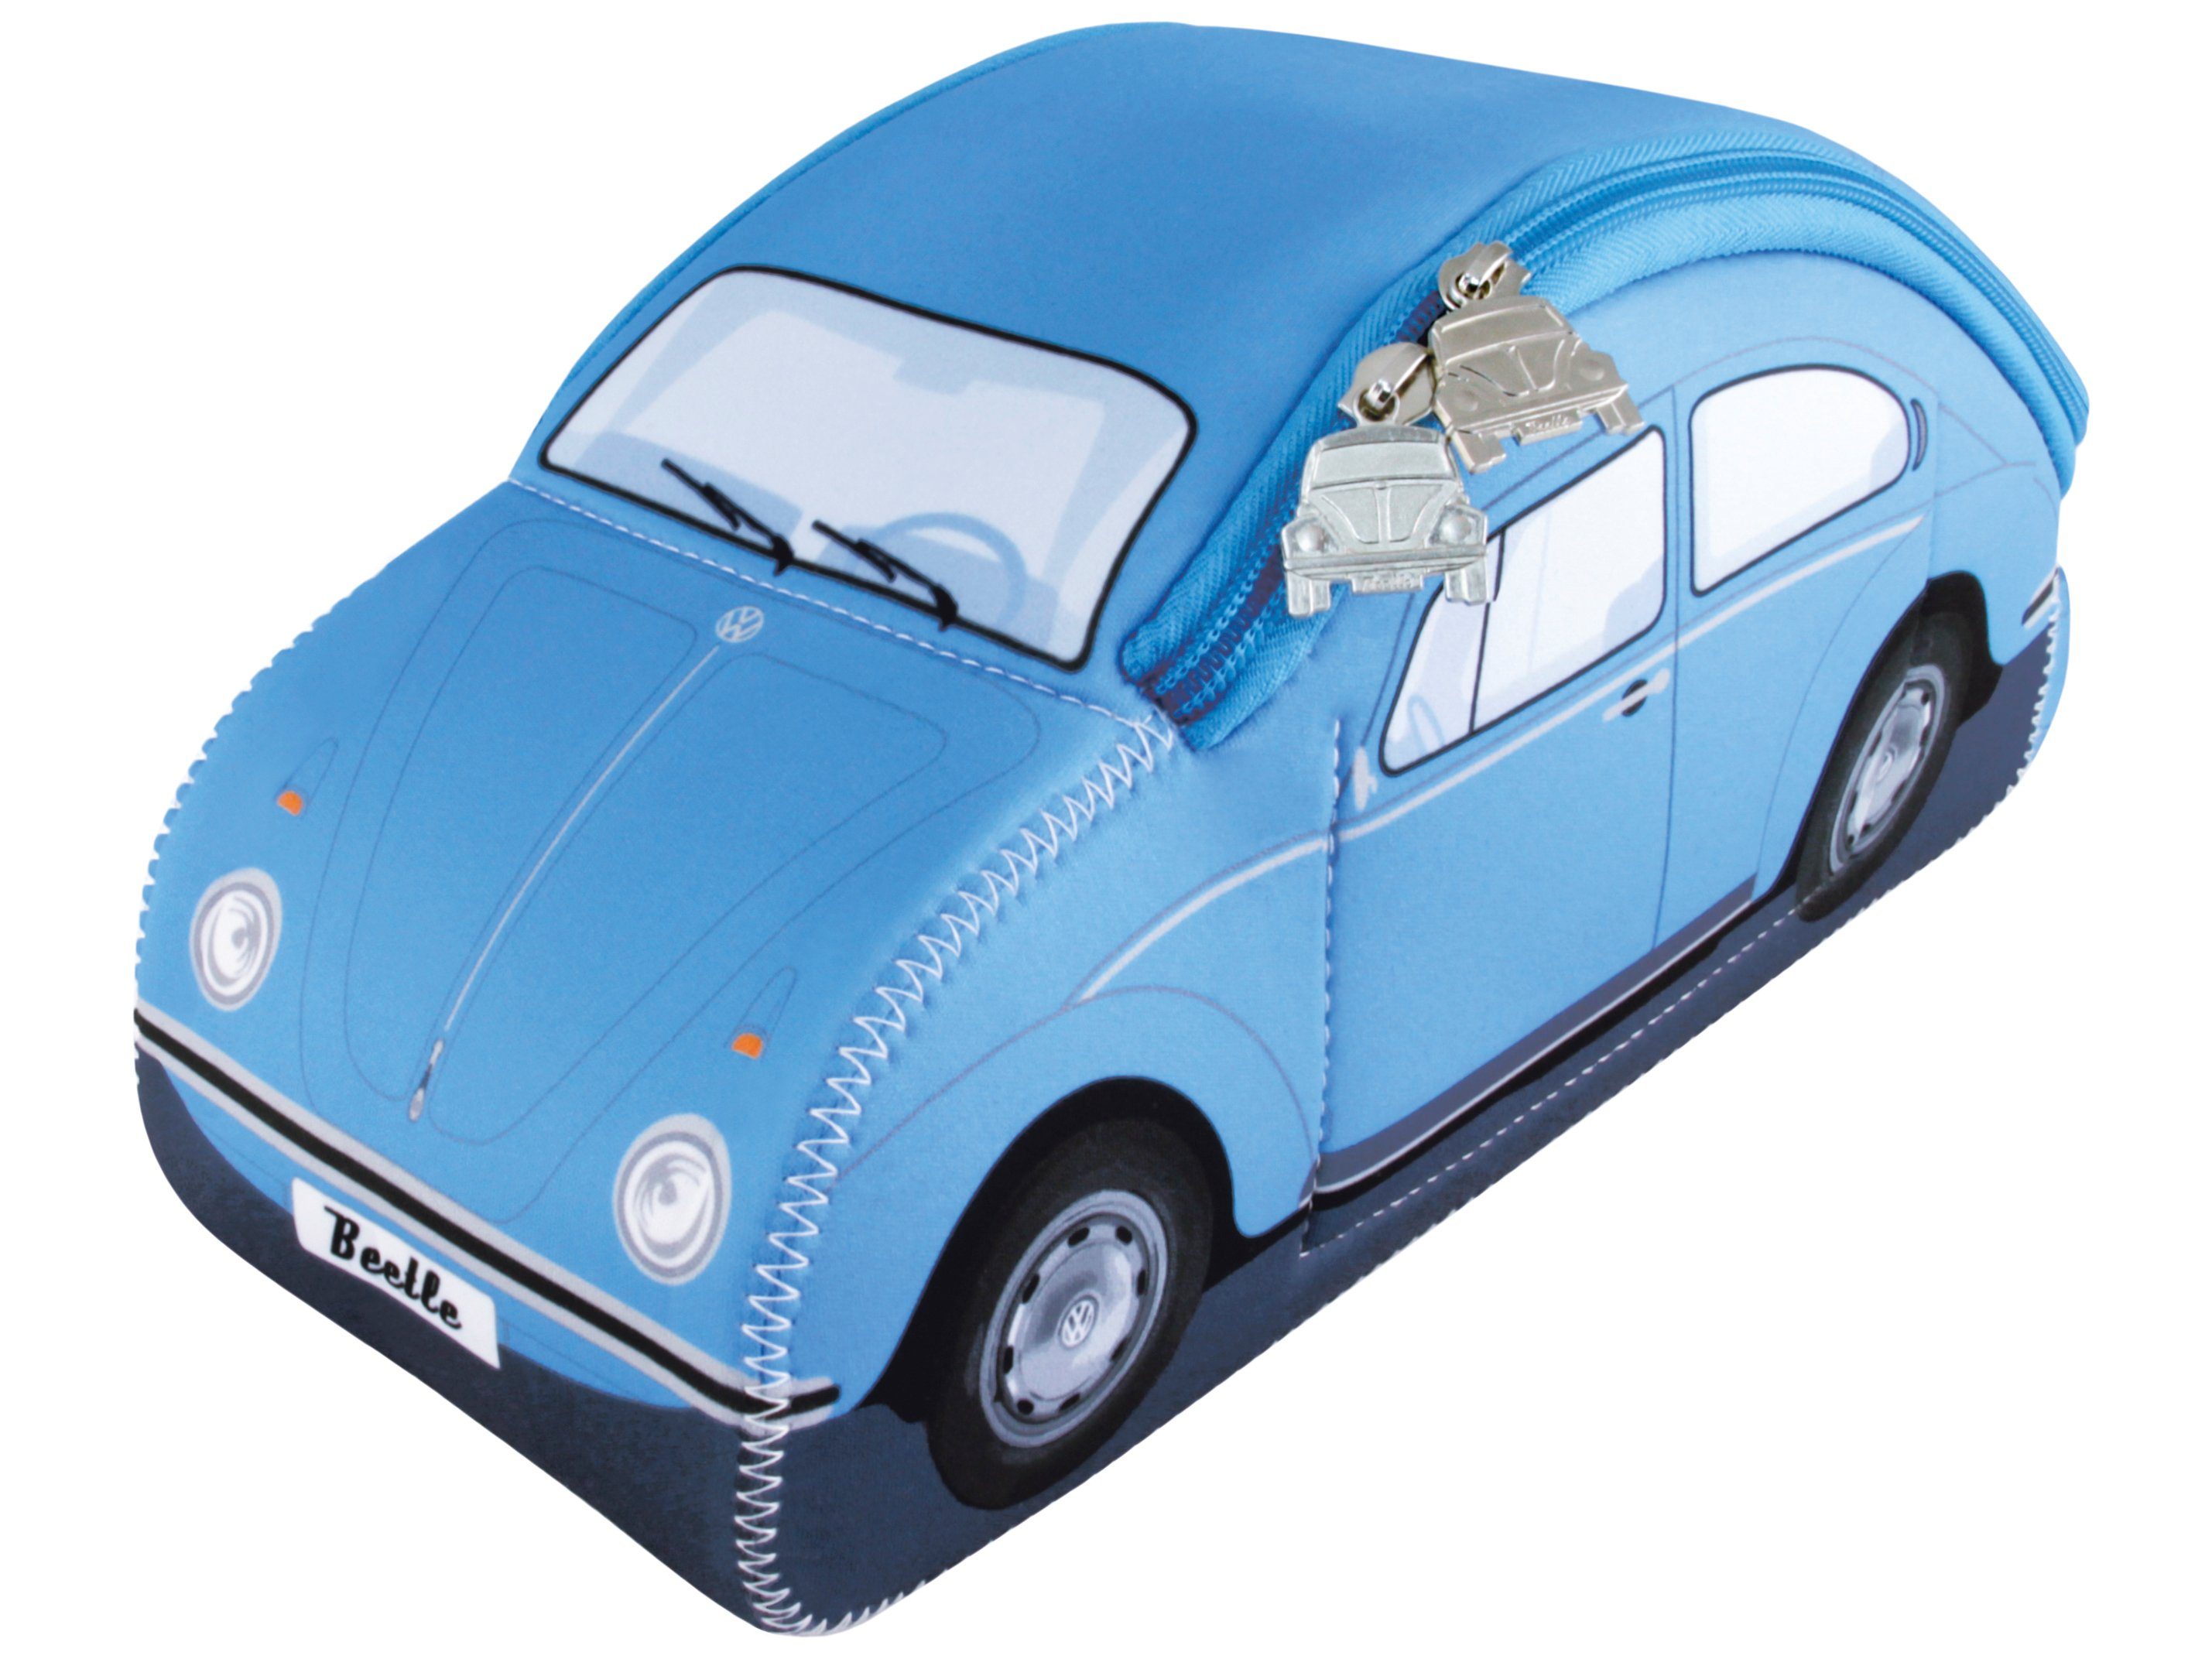 VW Collection by BRISA Kulturbeutel Volkswagen Neopren Kosmetikbeutel im Käfer/Beetle Design, hellblaue Schminktasche